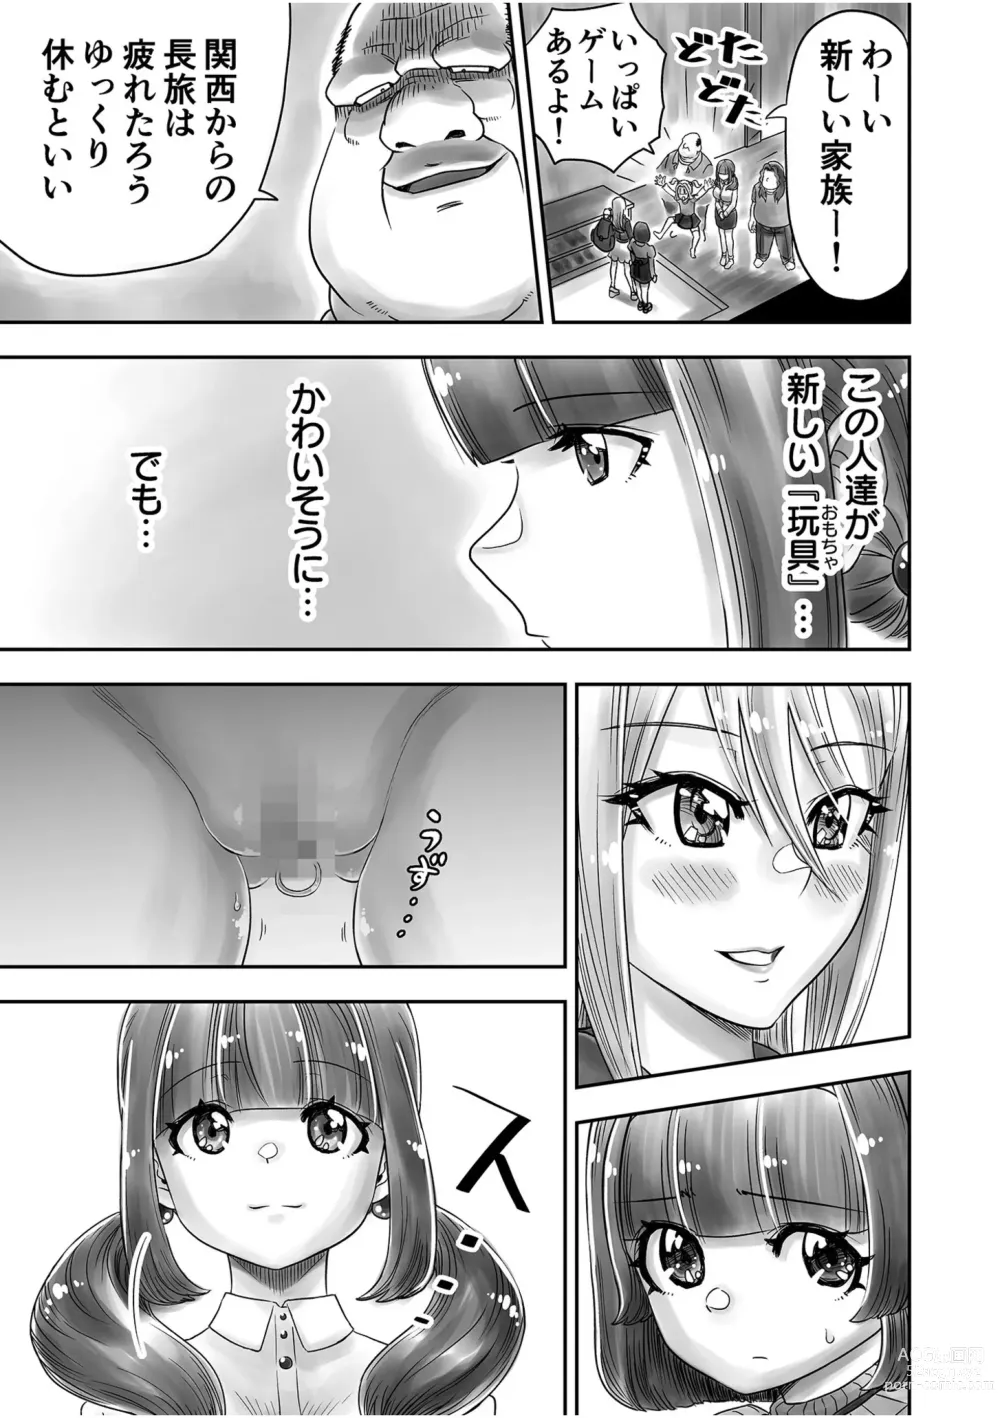 Page 159 of manga Shimai no Kyousei - sisters loud voice